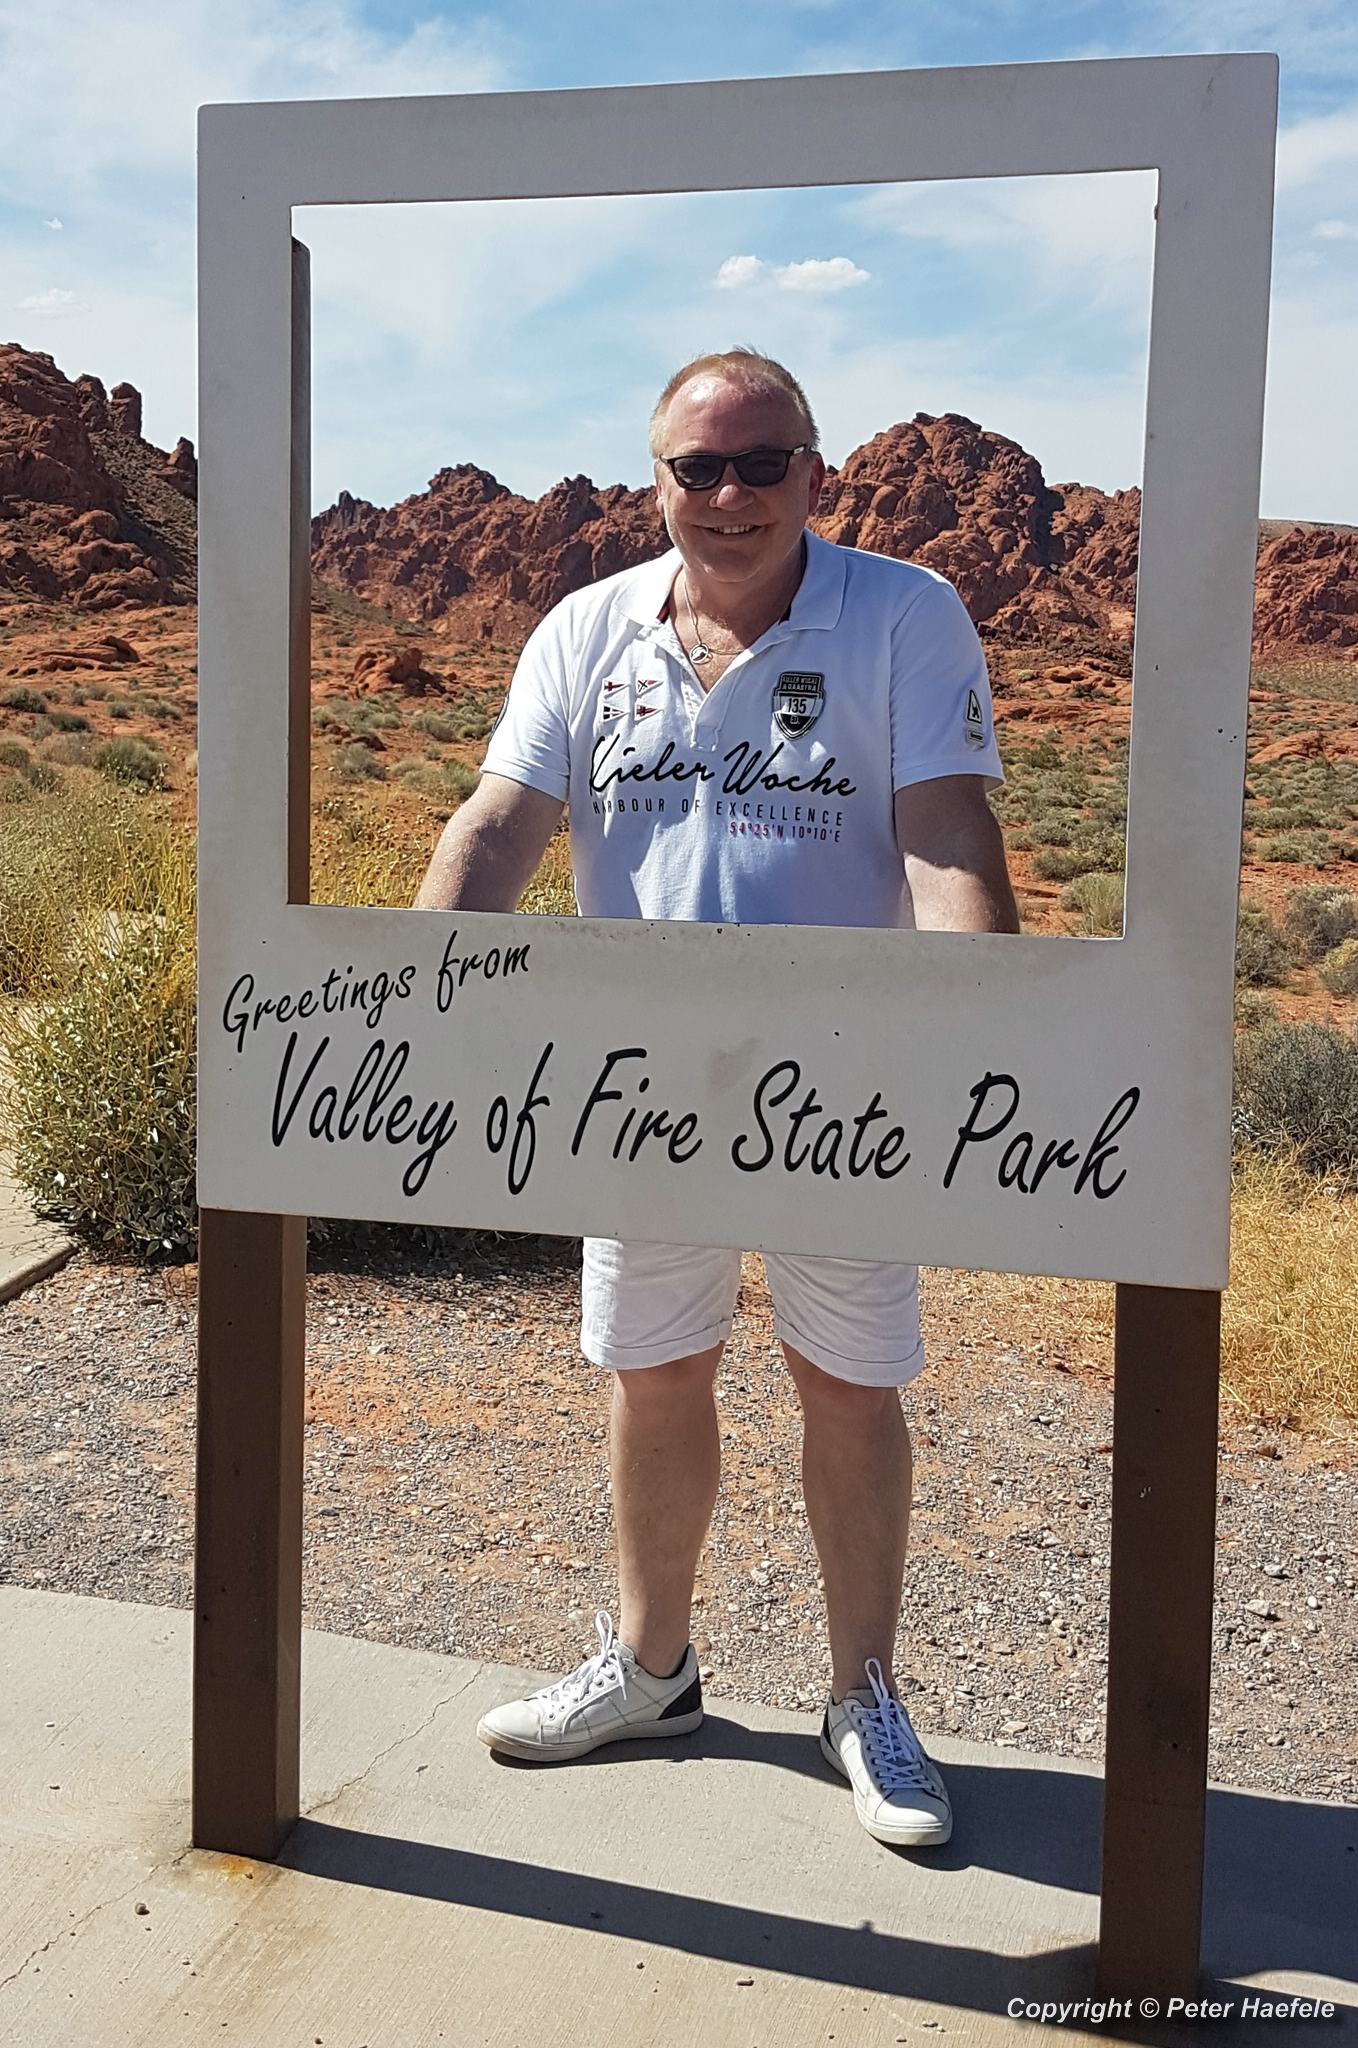 Roadtrip USA - Valley of Fire State Park - Nevada